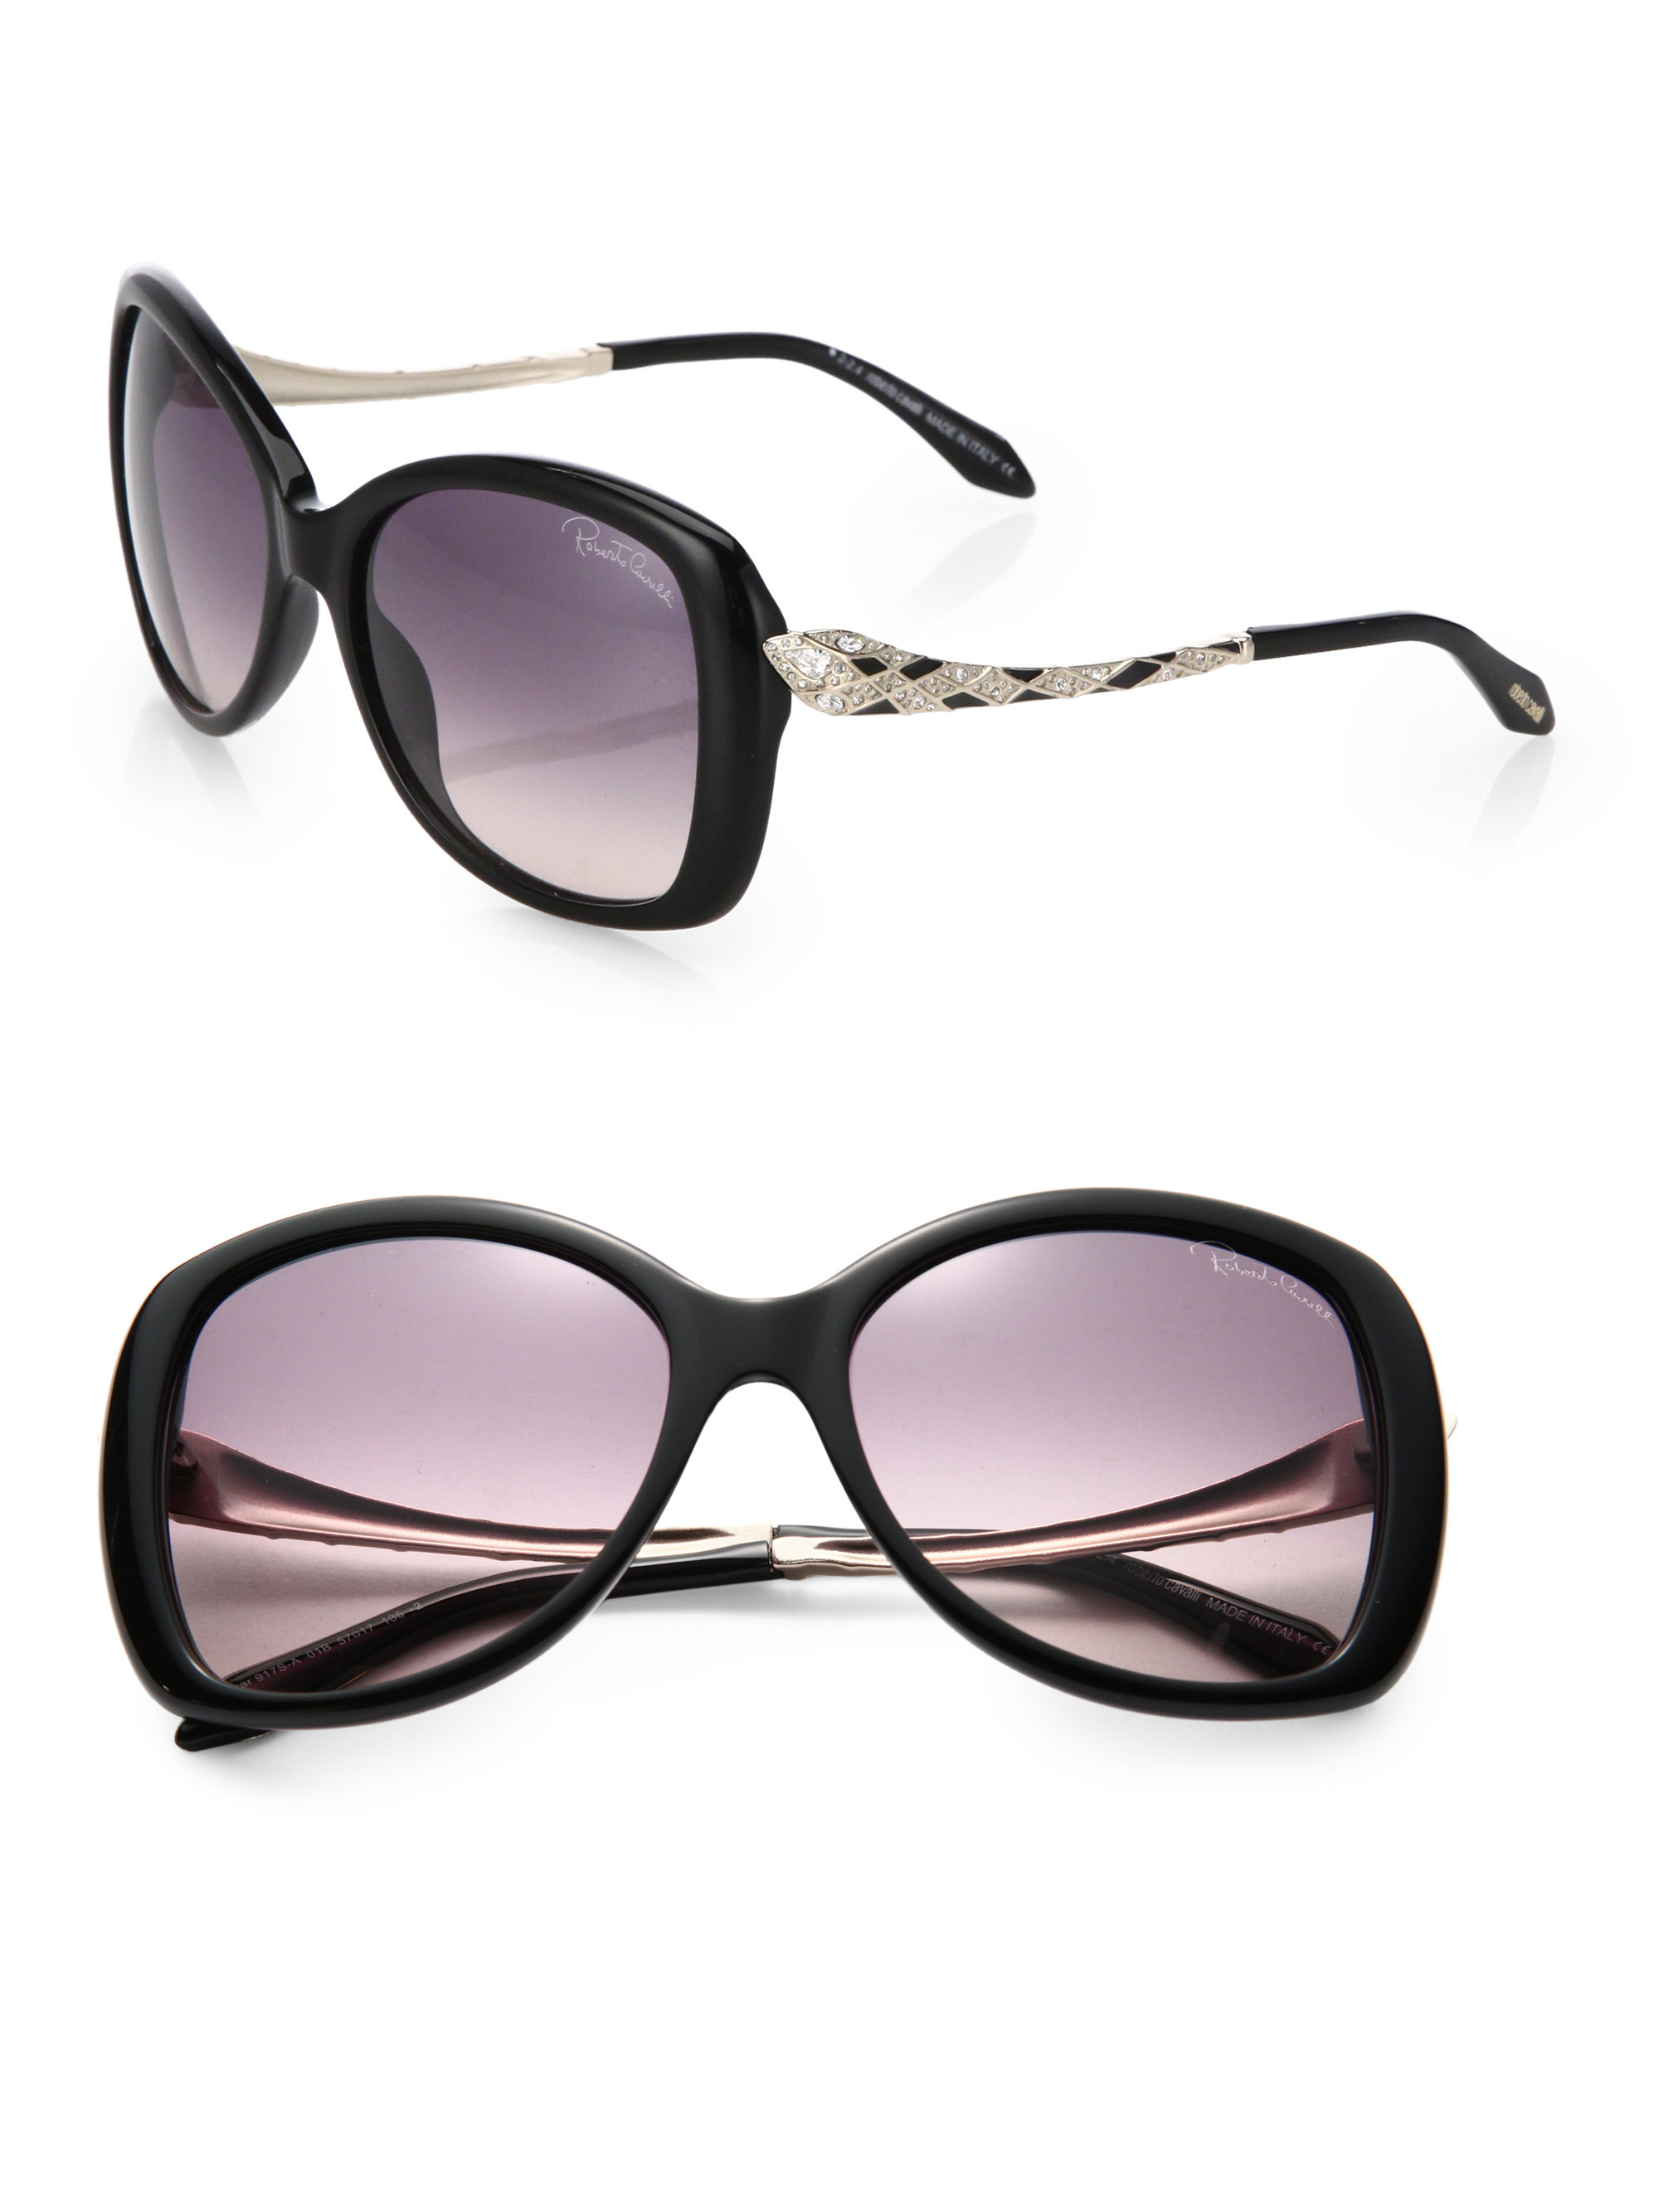 Lyst - Roberto cavalli Embellished Snake 57mm Round Sunglasses in Black